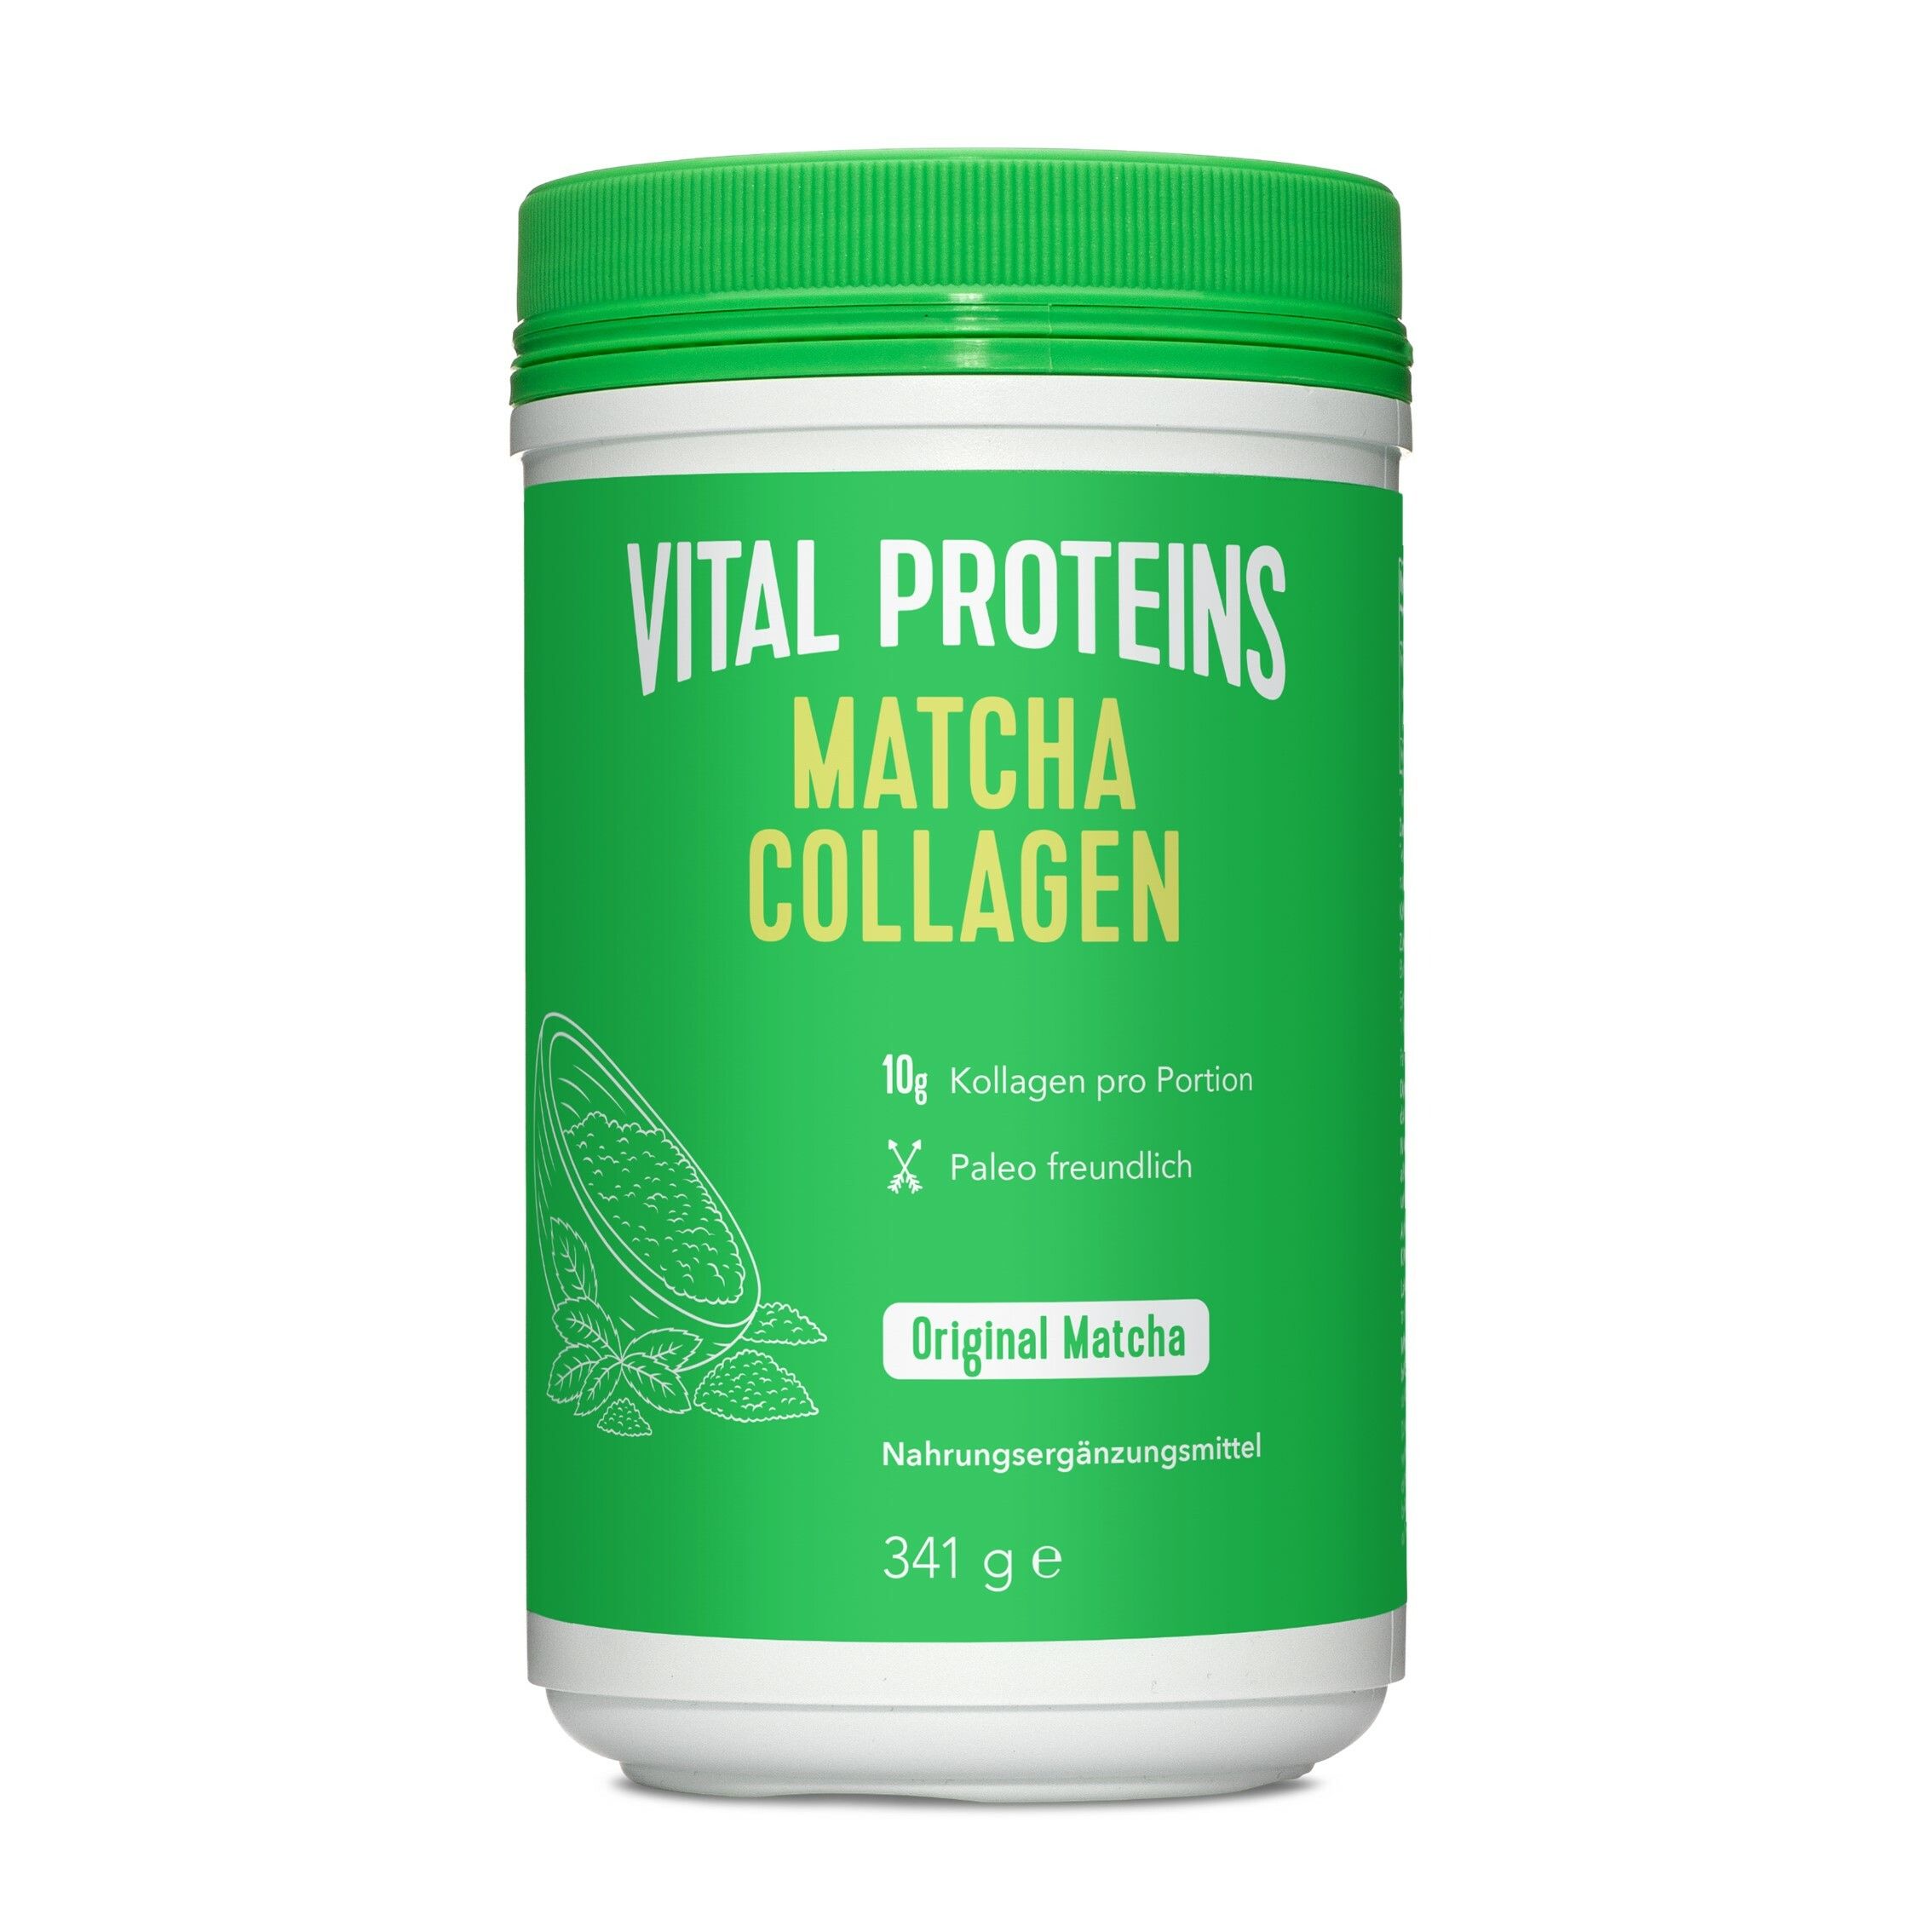 Image of Vital Proteins Matcha Kollagen mit Matcha-Teepulver